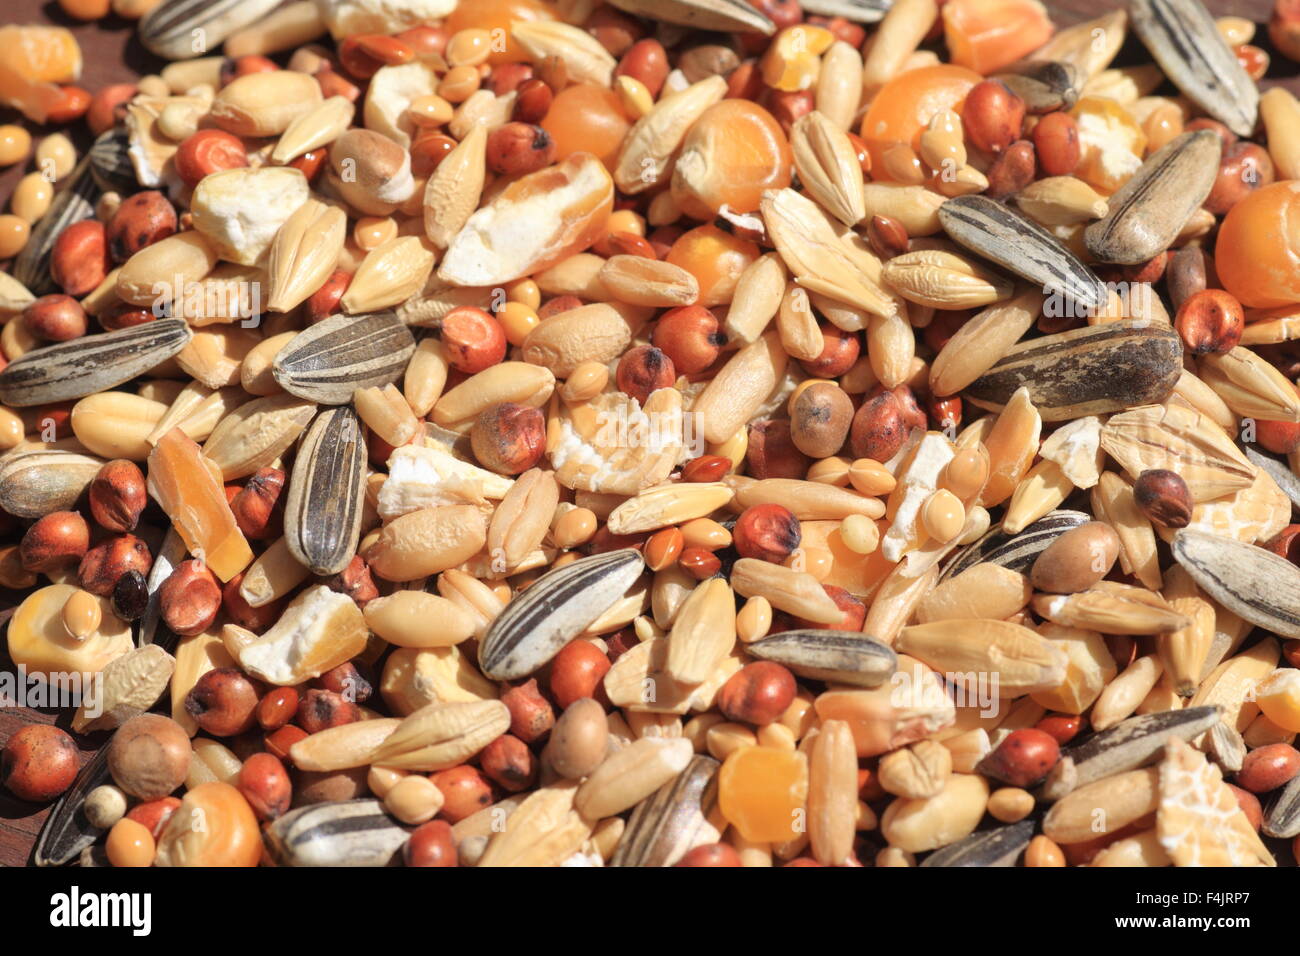 Hamster's food, including oats, corns,herbs Stock Photo